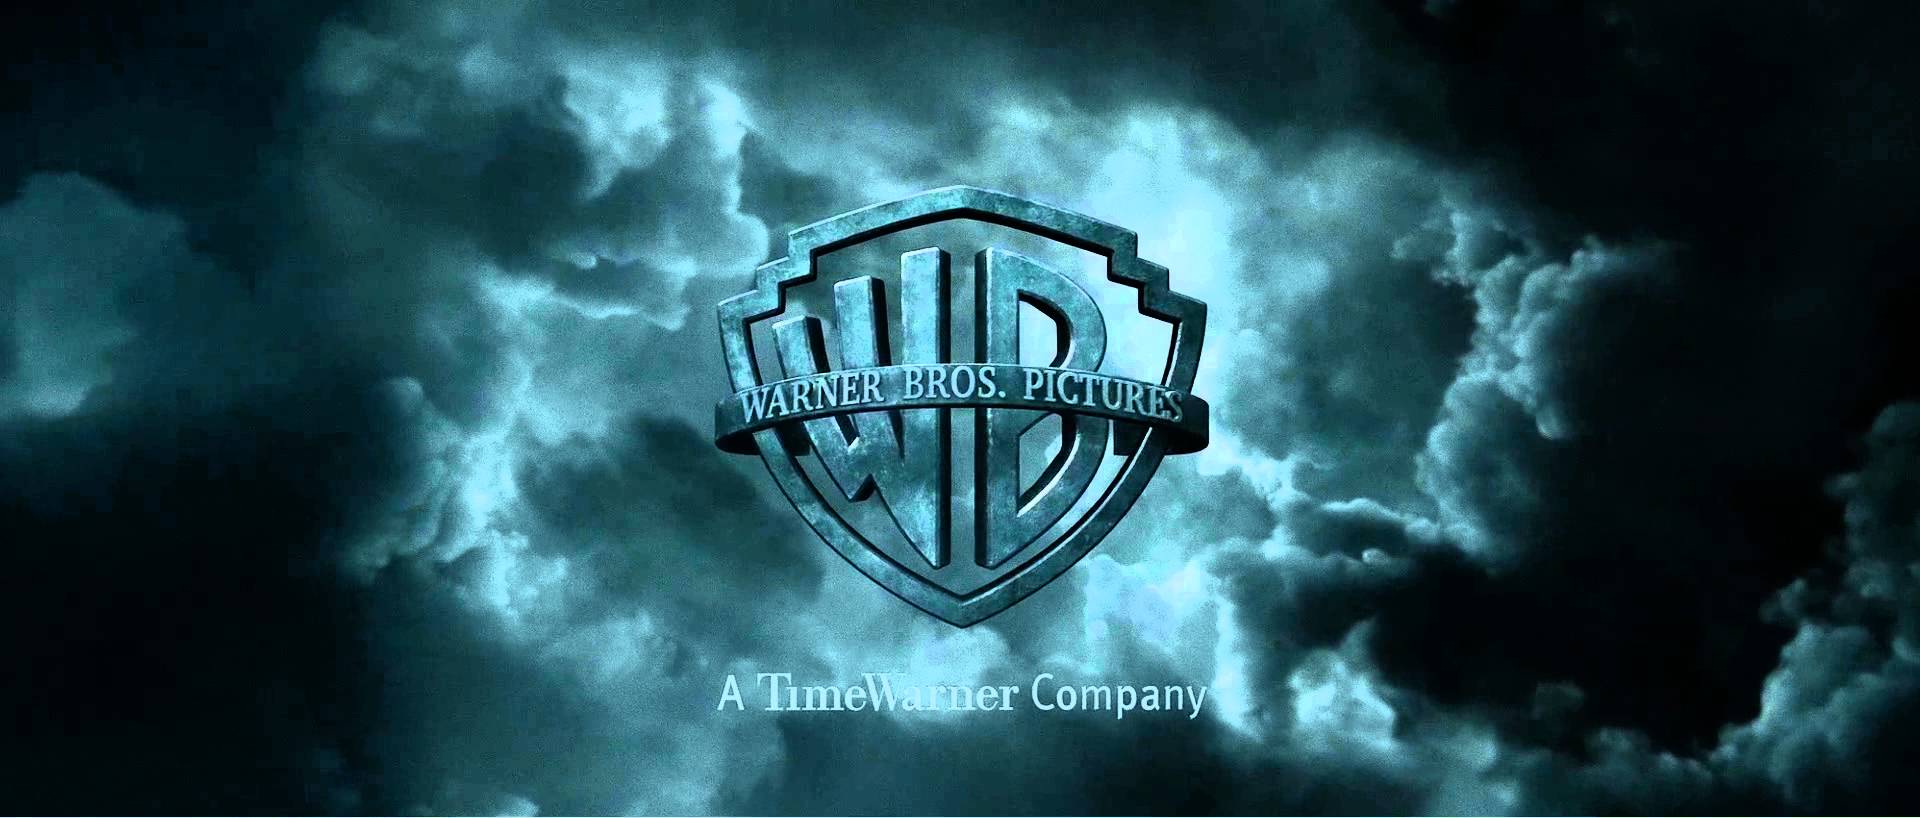 Warner Bros K Wallpapers Top Free Warner Bros K Backgrounds WallpaperAccess